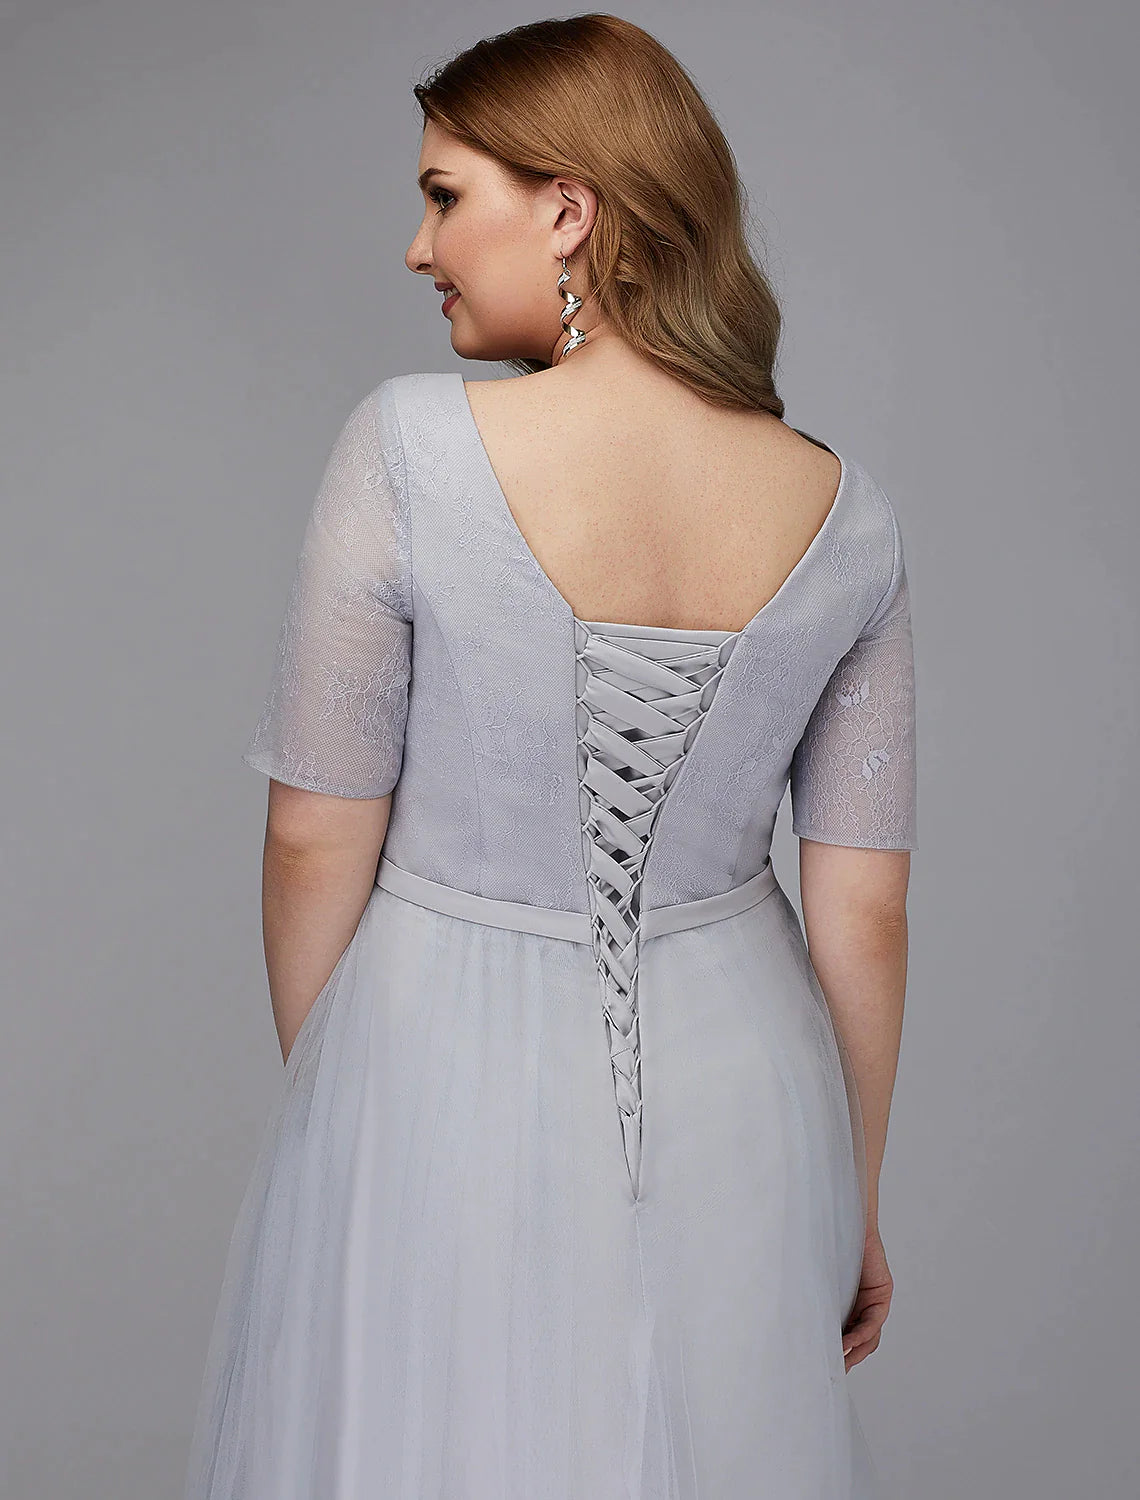 A-Line Elegant Dress Wedding Guest Tea Length Short Sleeve V Neck Lace Lace-up with Sash / Ribbon